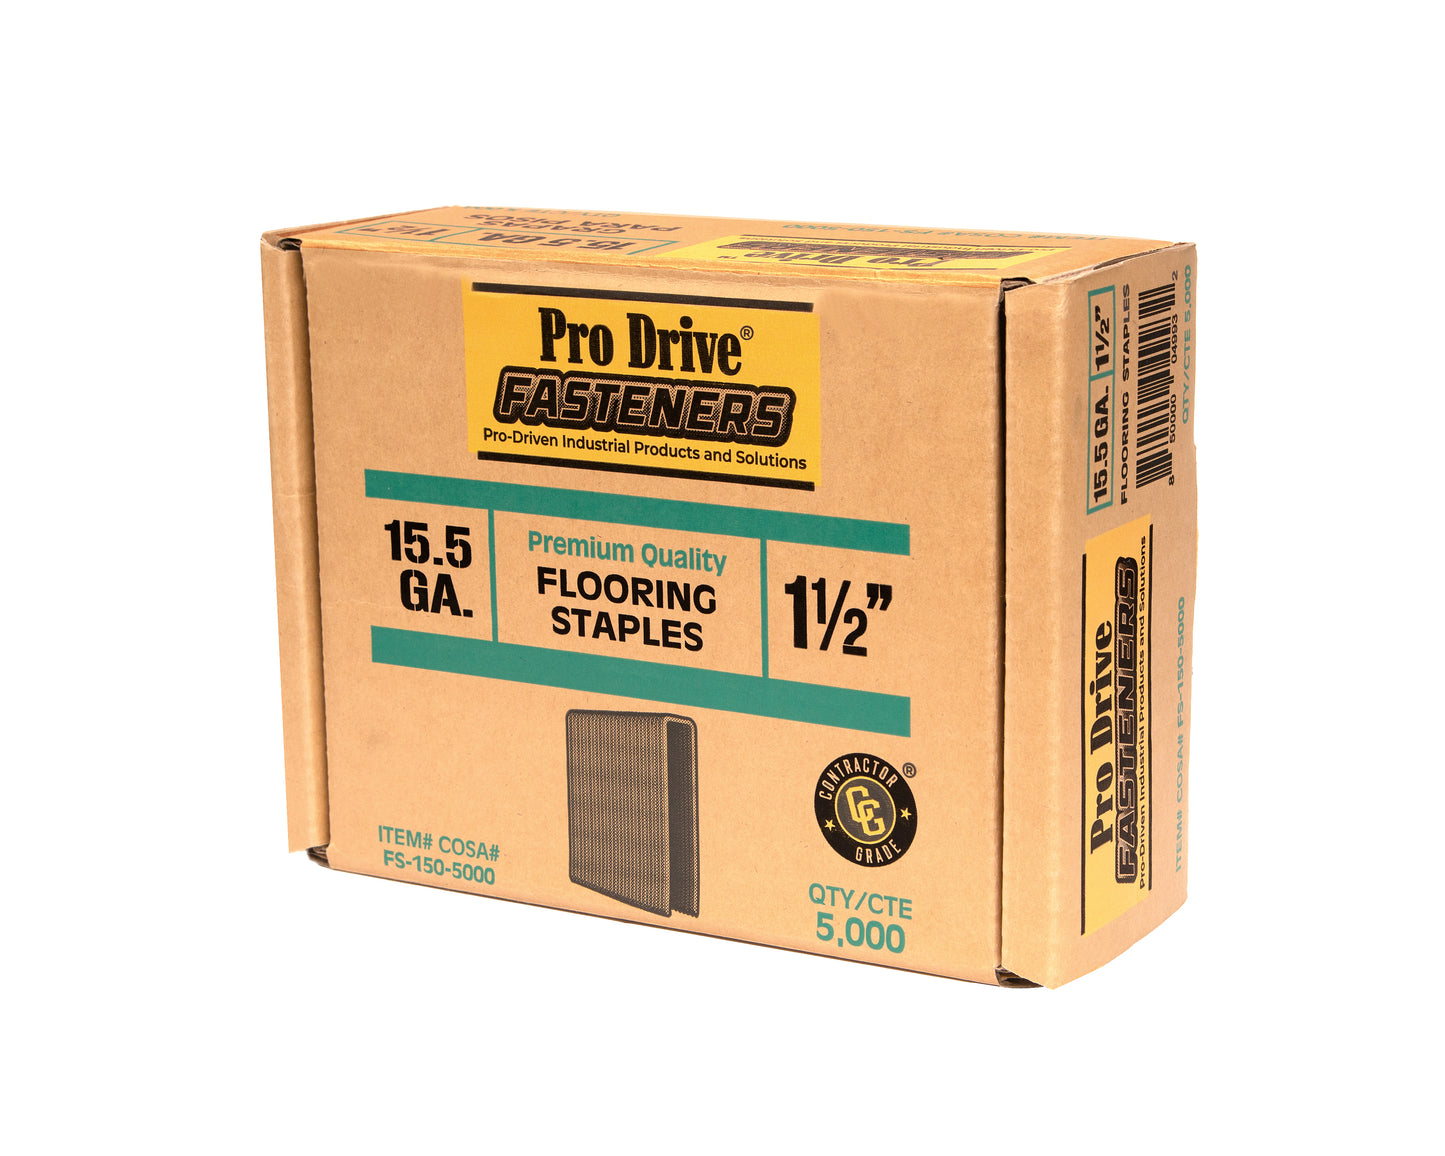 15.5 GA Hardwood Flooring Staples